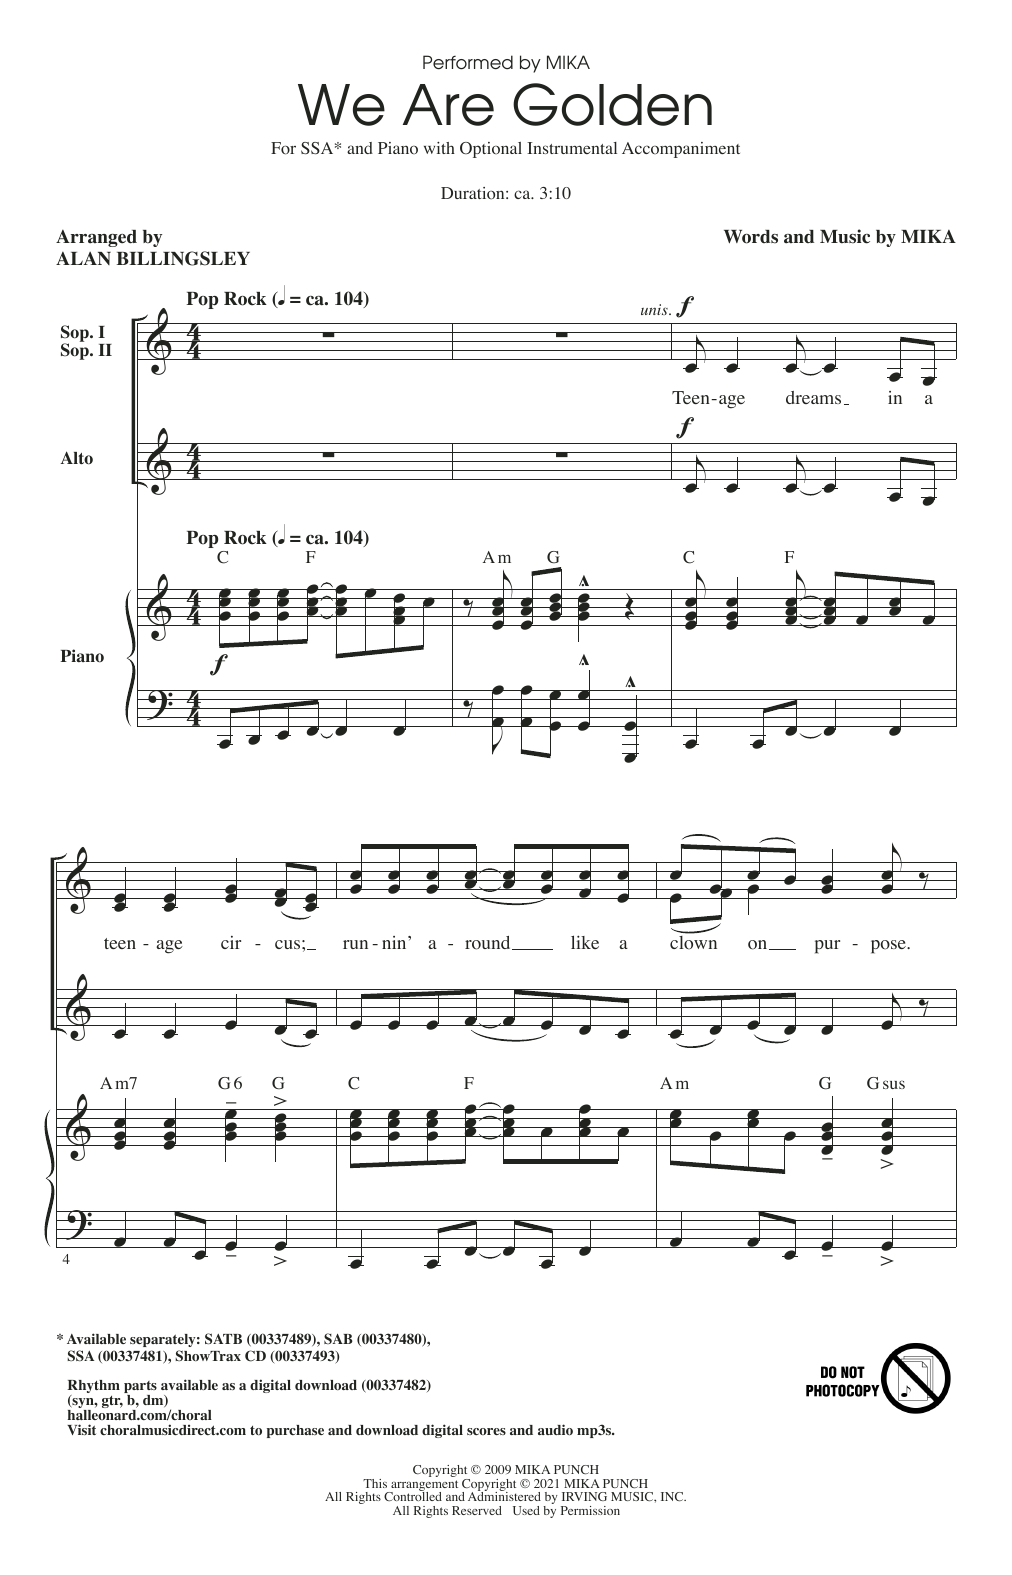 Mika We Are Golden (arr. Alan Billingsley) Sheet Music Notes & Chords for SATB Choir - Download or Print PDF